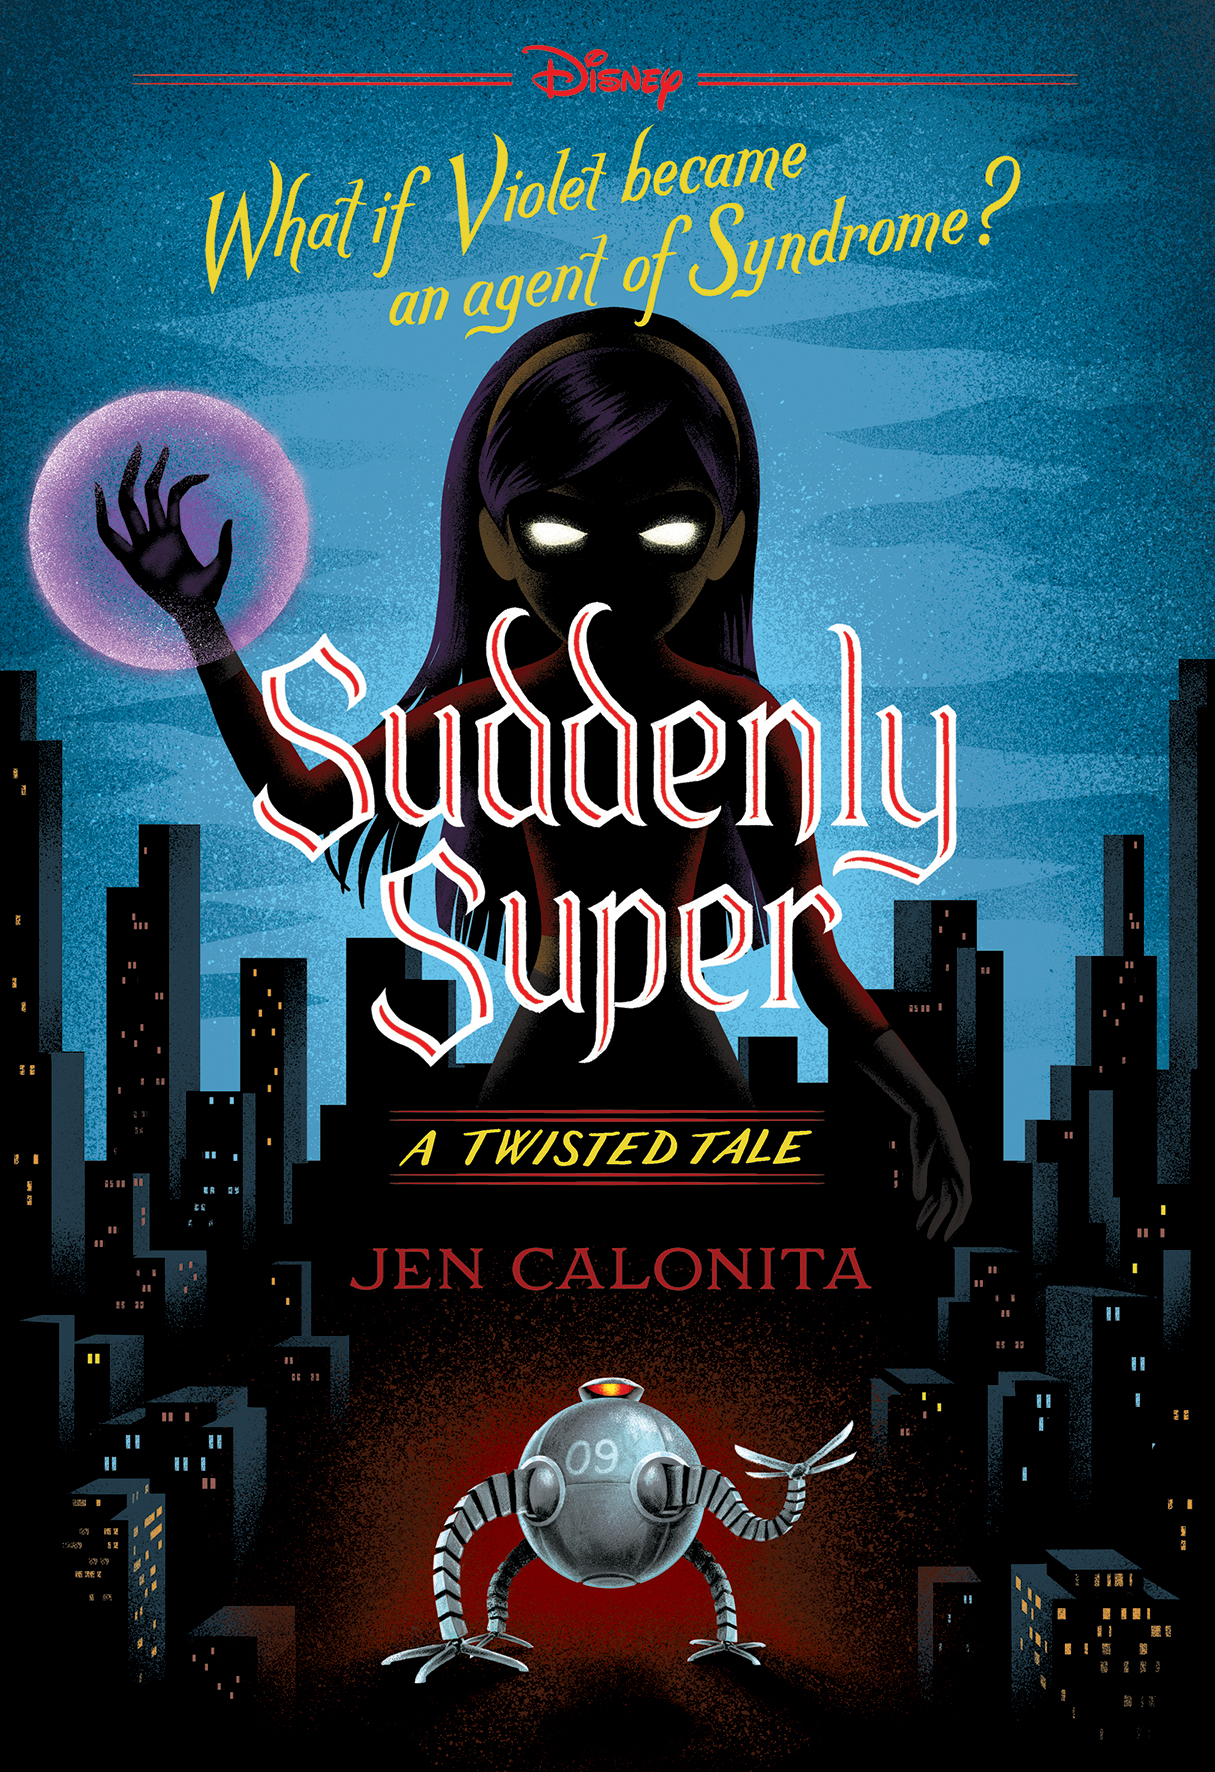 Suddenly Super (A Twisted Tale) | Disney Wiki | Fandom